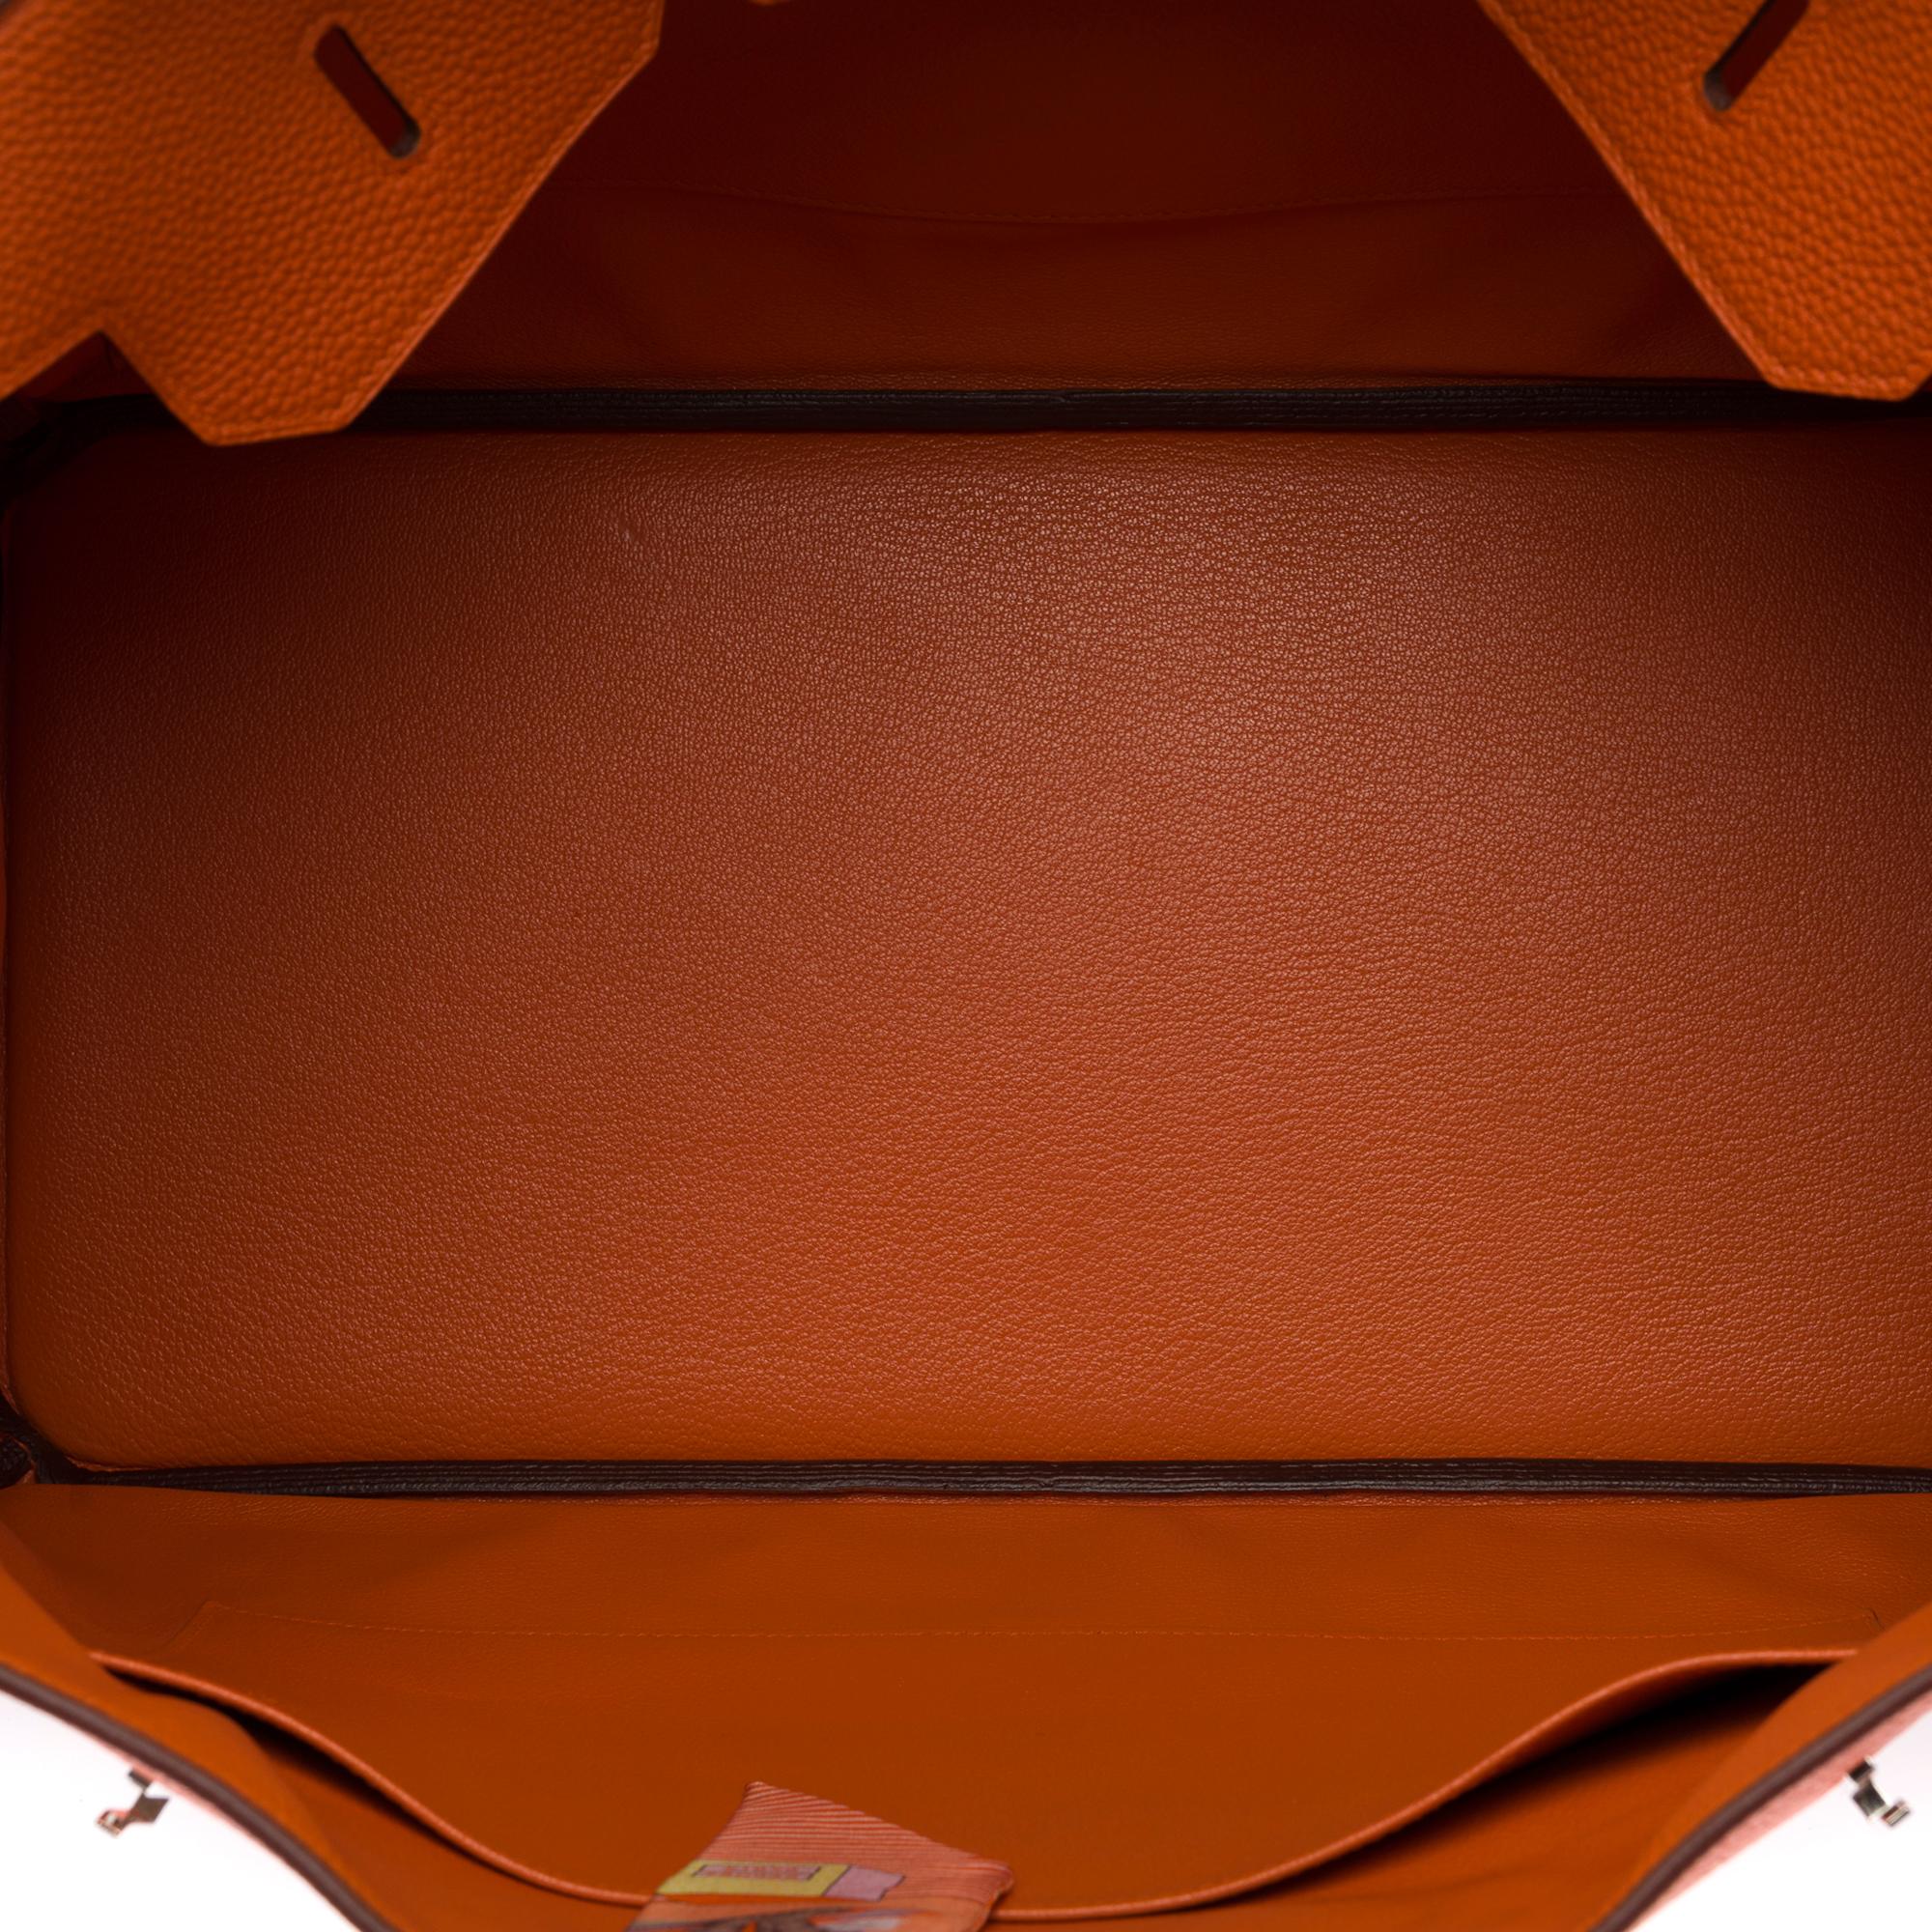 Stunning Hermes Birkin 40cm handbag in Orange Terre battue Togo leather, SHW 4